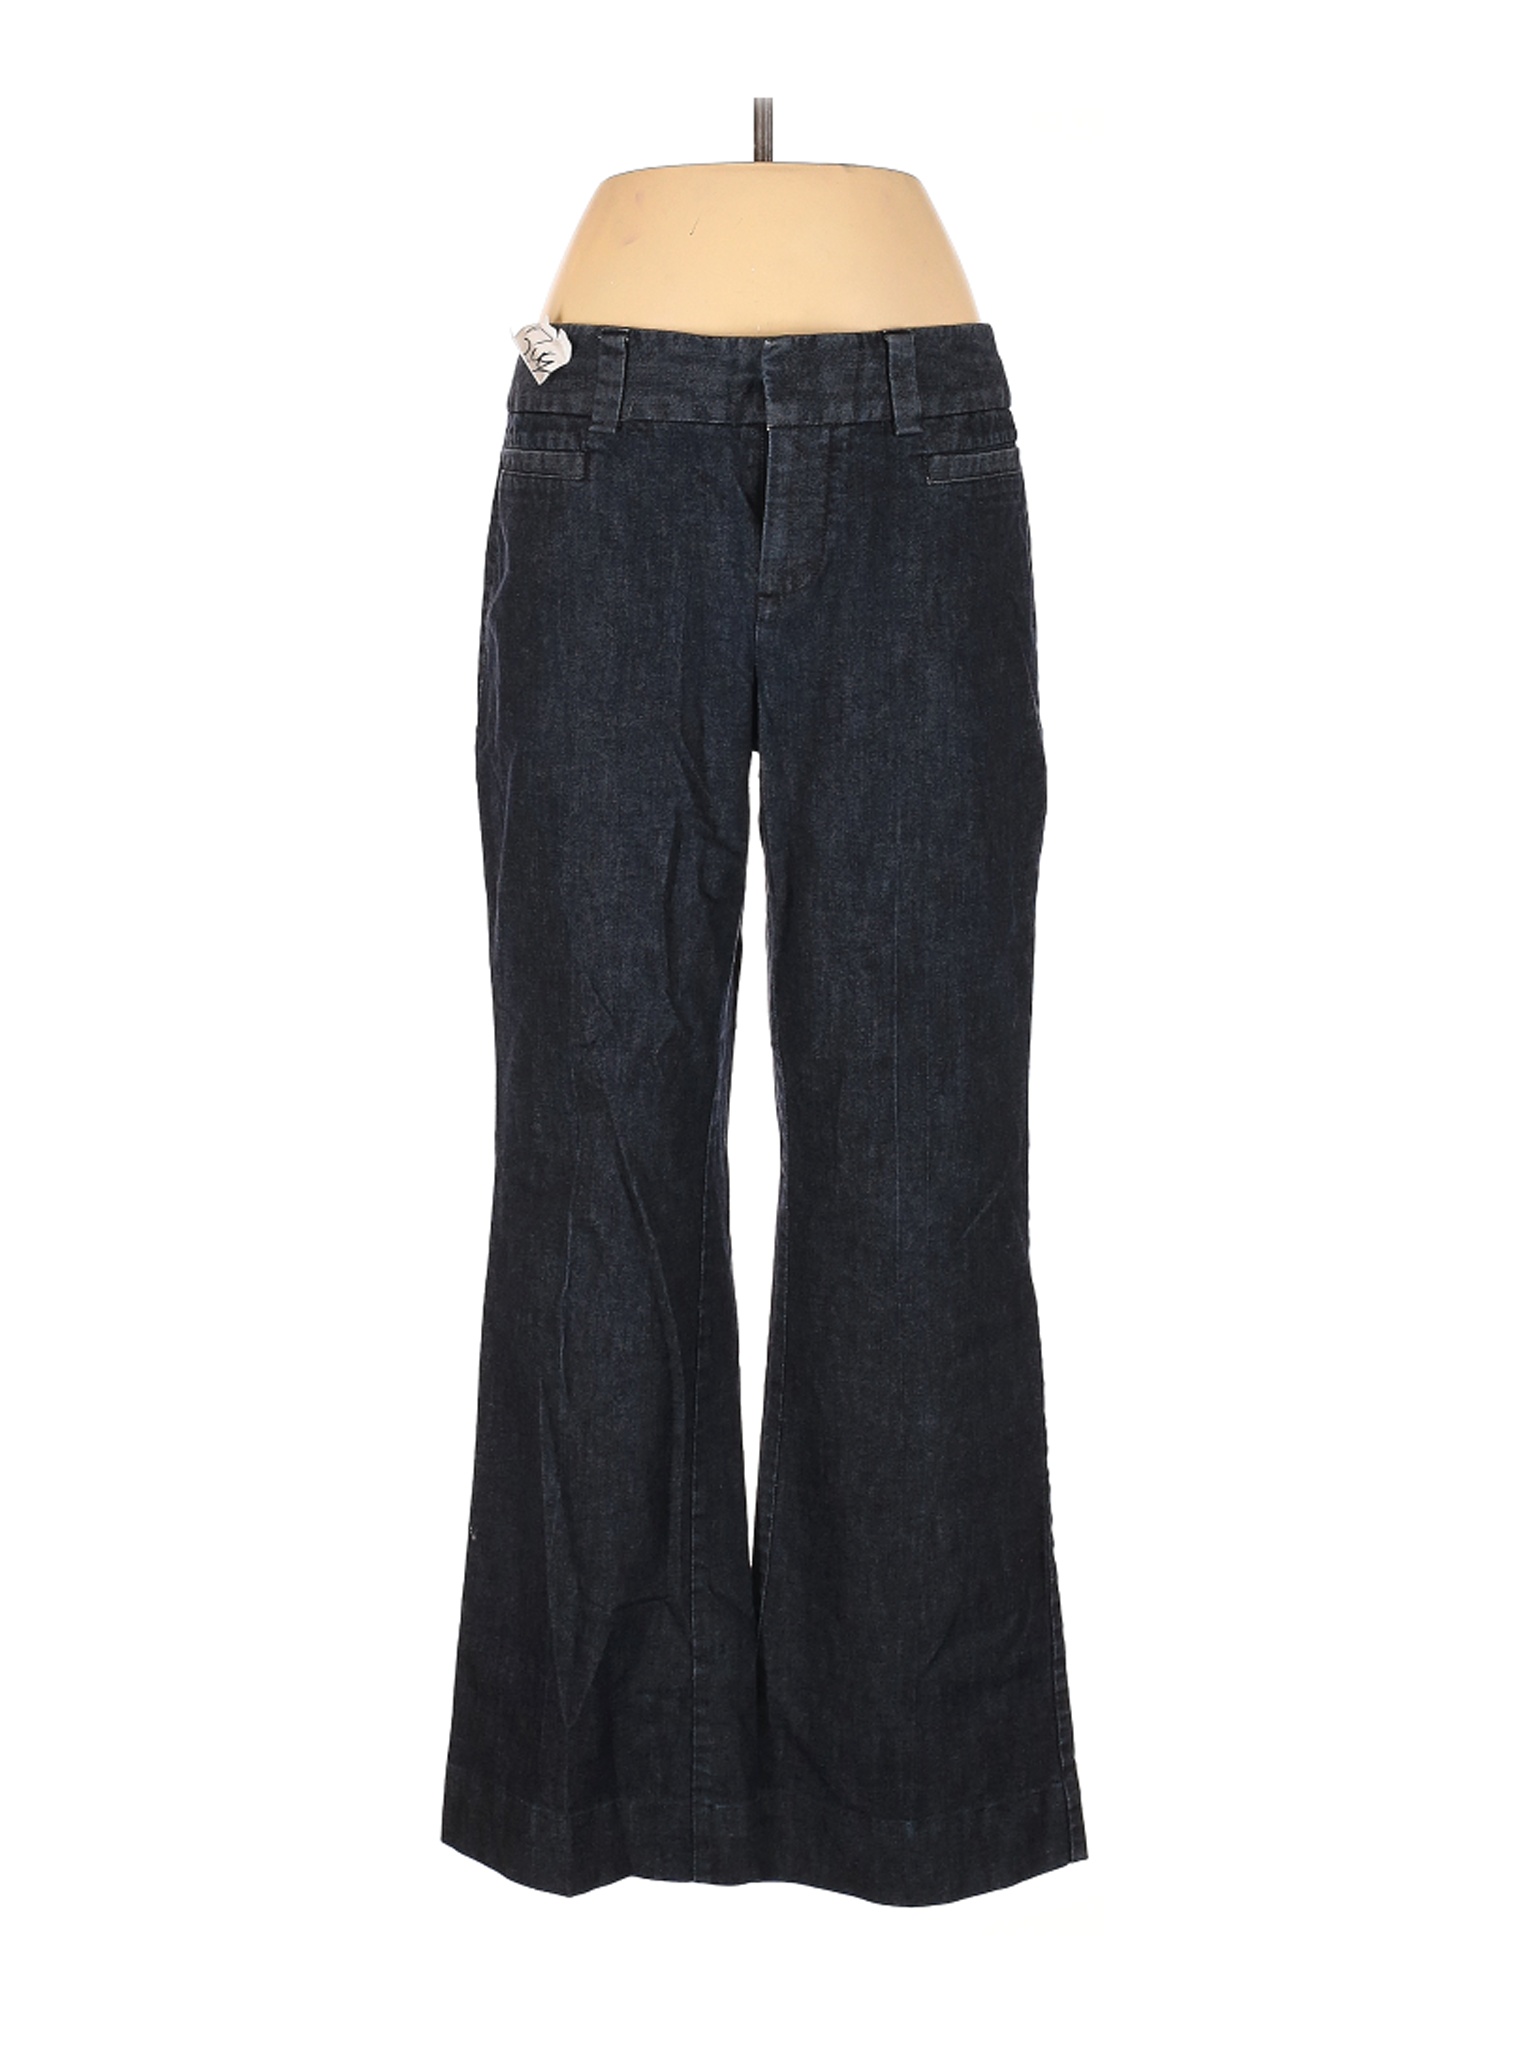 Gap Women Black Jeans 10 Tall | eBay